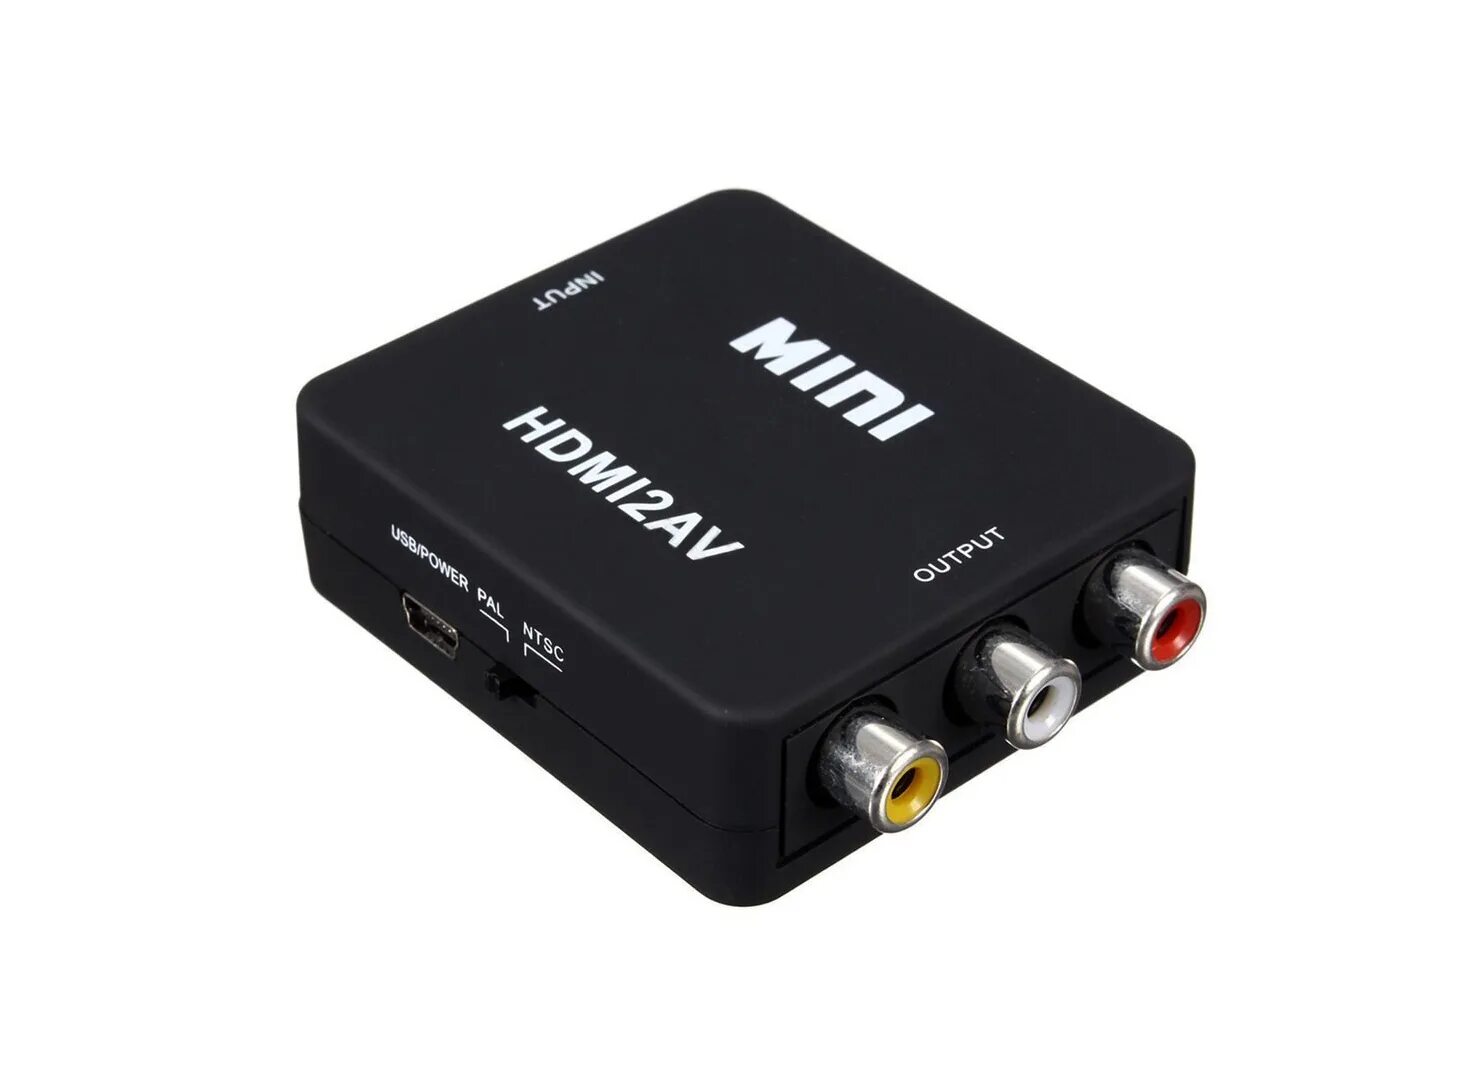 Адаптер Mini av/HDMI 1080p Converter to 3 RCA (Black). HDMI to RCA av Converter hdmi2av. Адаптер переходник RCA (тюльпан) HDMI. Переходник HDMI to av (RCA).